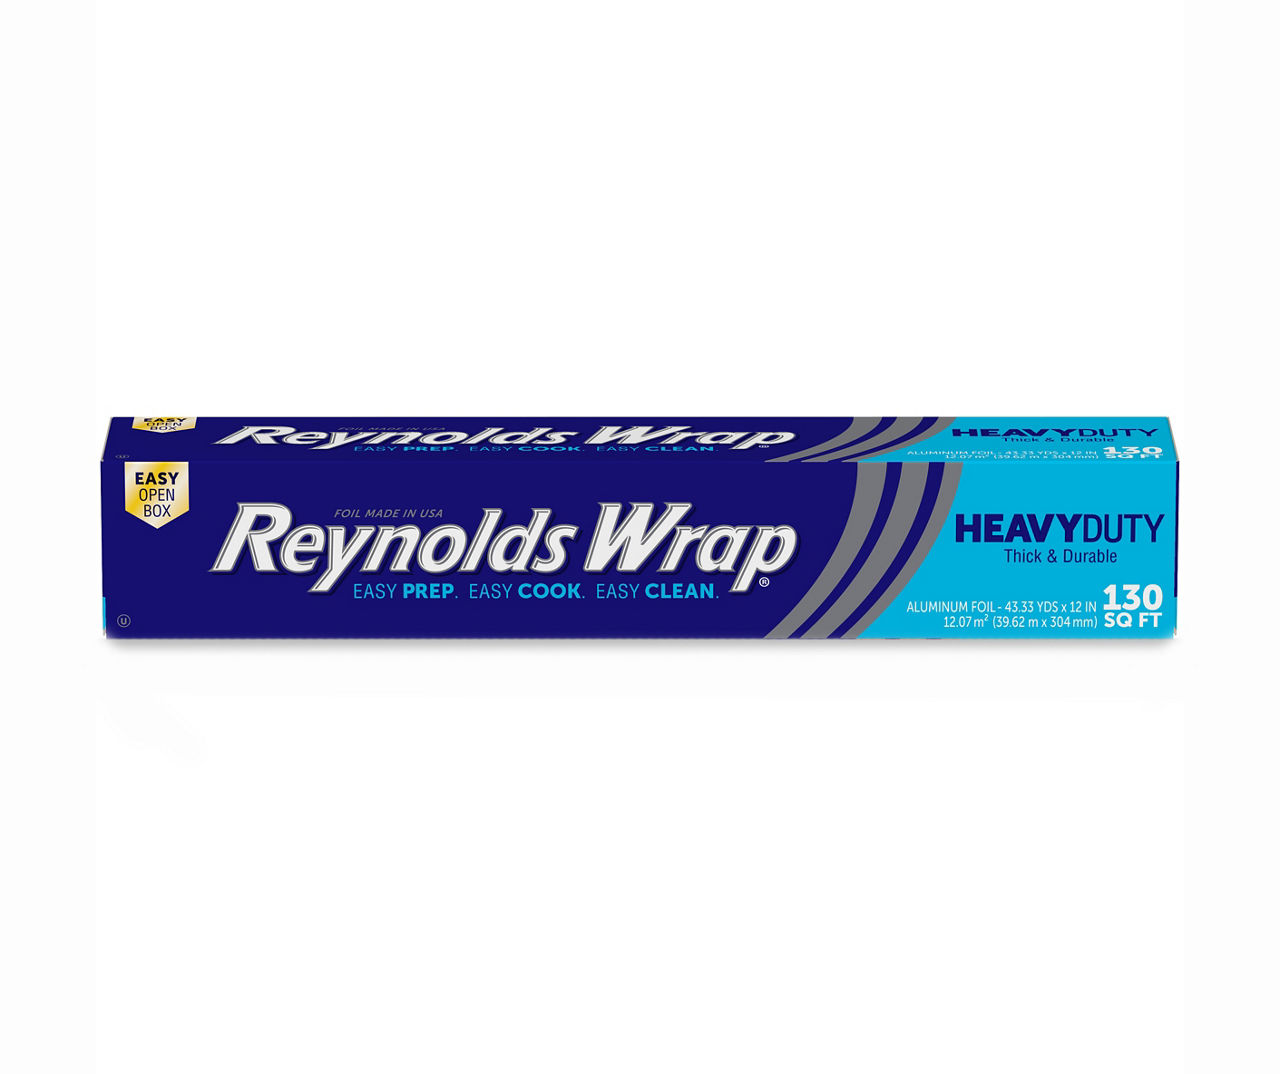 Reynolds Wrap Heavy Duty Aluminum Foil 130 Square Foot Roll 